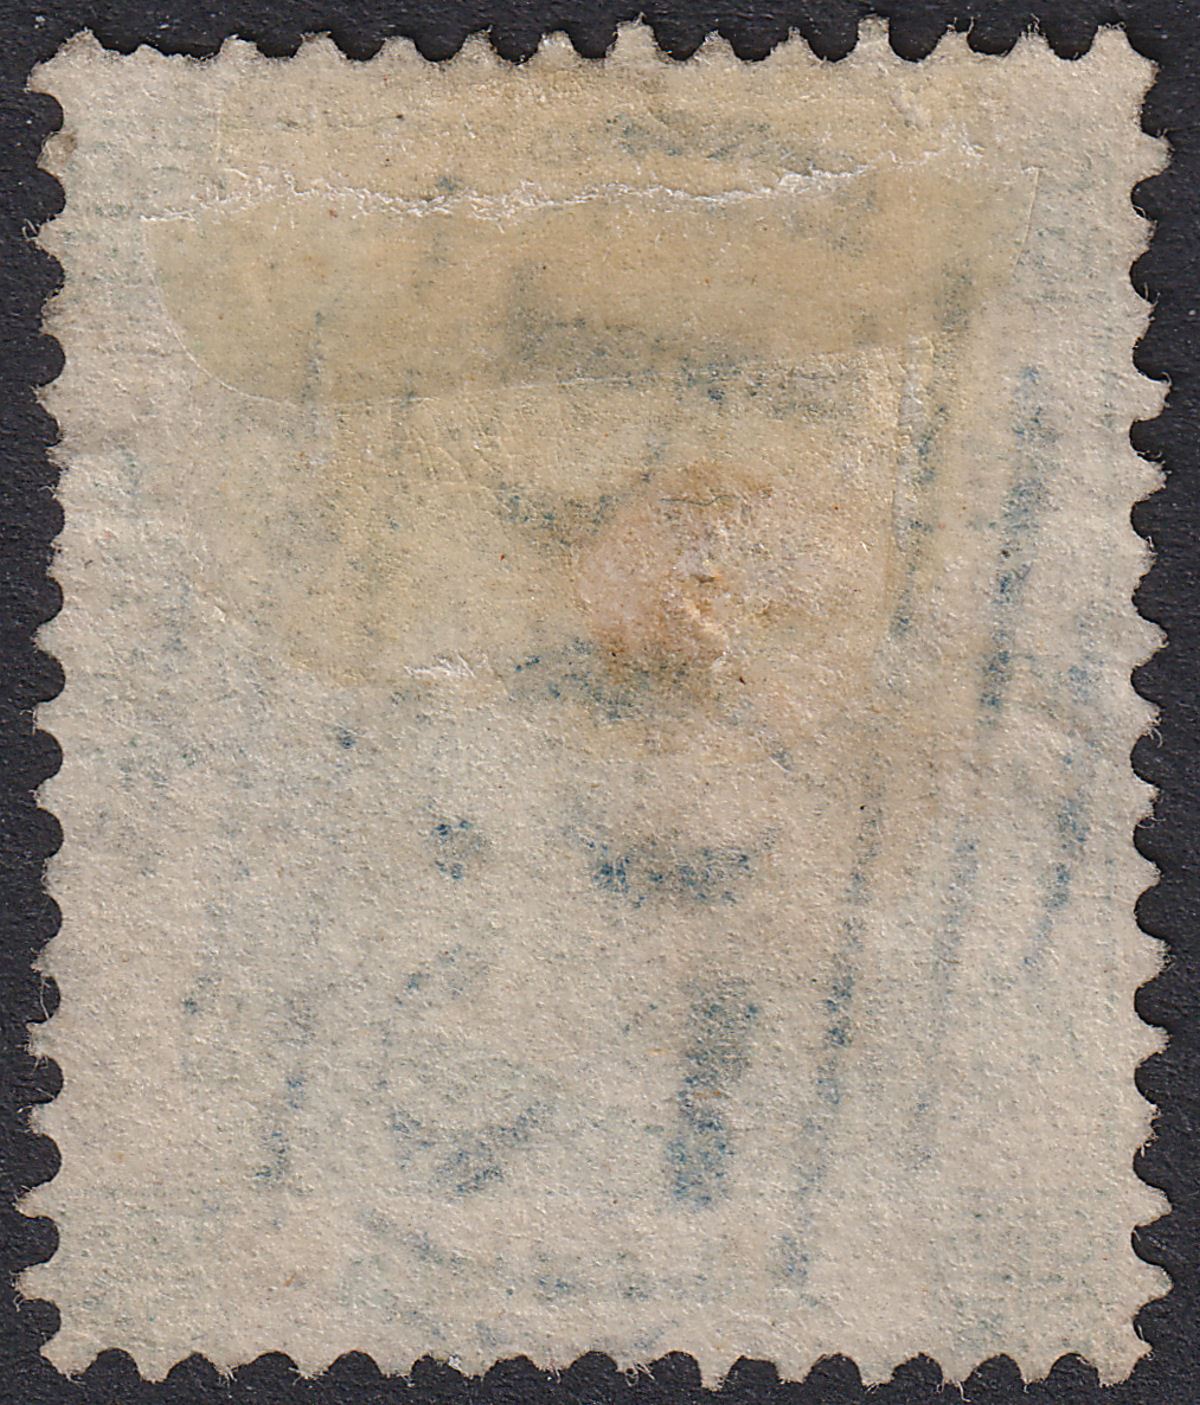 Hong Kong 1862 QV 24c Green Used SG5 cat £120 with blue B62 postmark